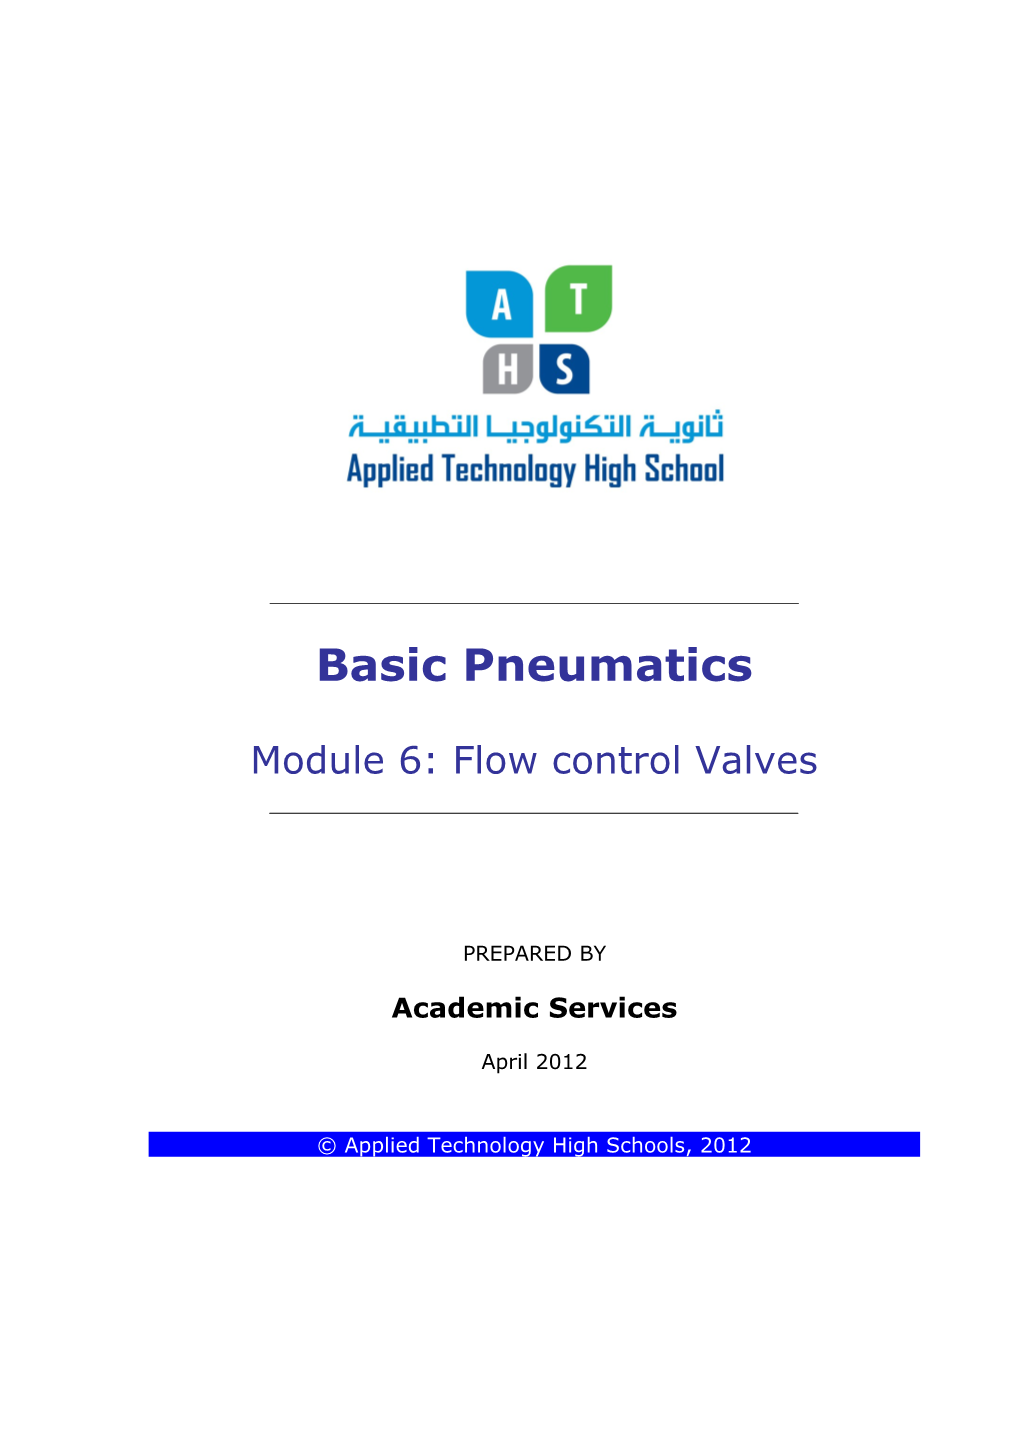 ATM 1132 Basic Pneumatics